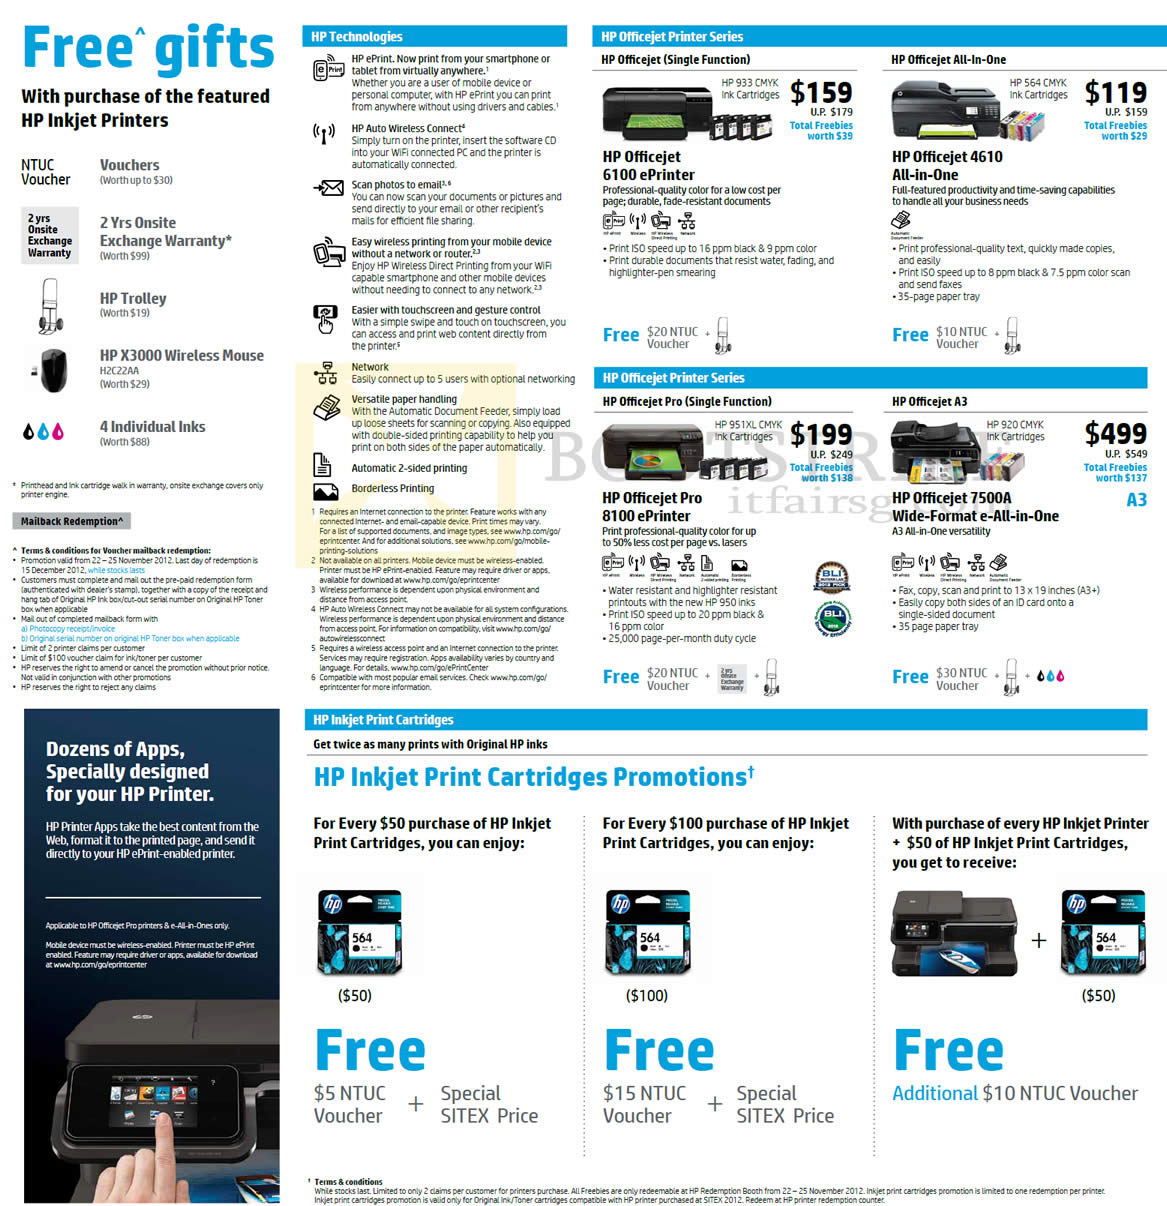 SITEX 2012 price list image brochure of HP Printers Inkjet Officejet 6100 EPrinter 4610 7500A, Pro 8100, Ink Cartridges